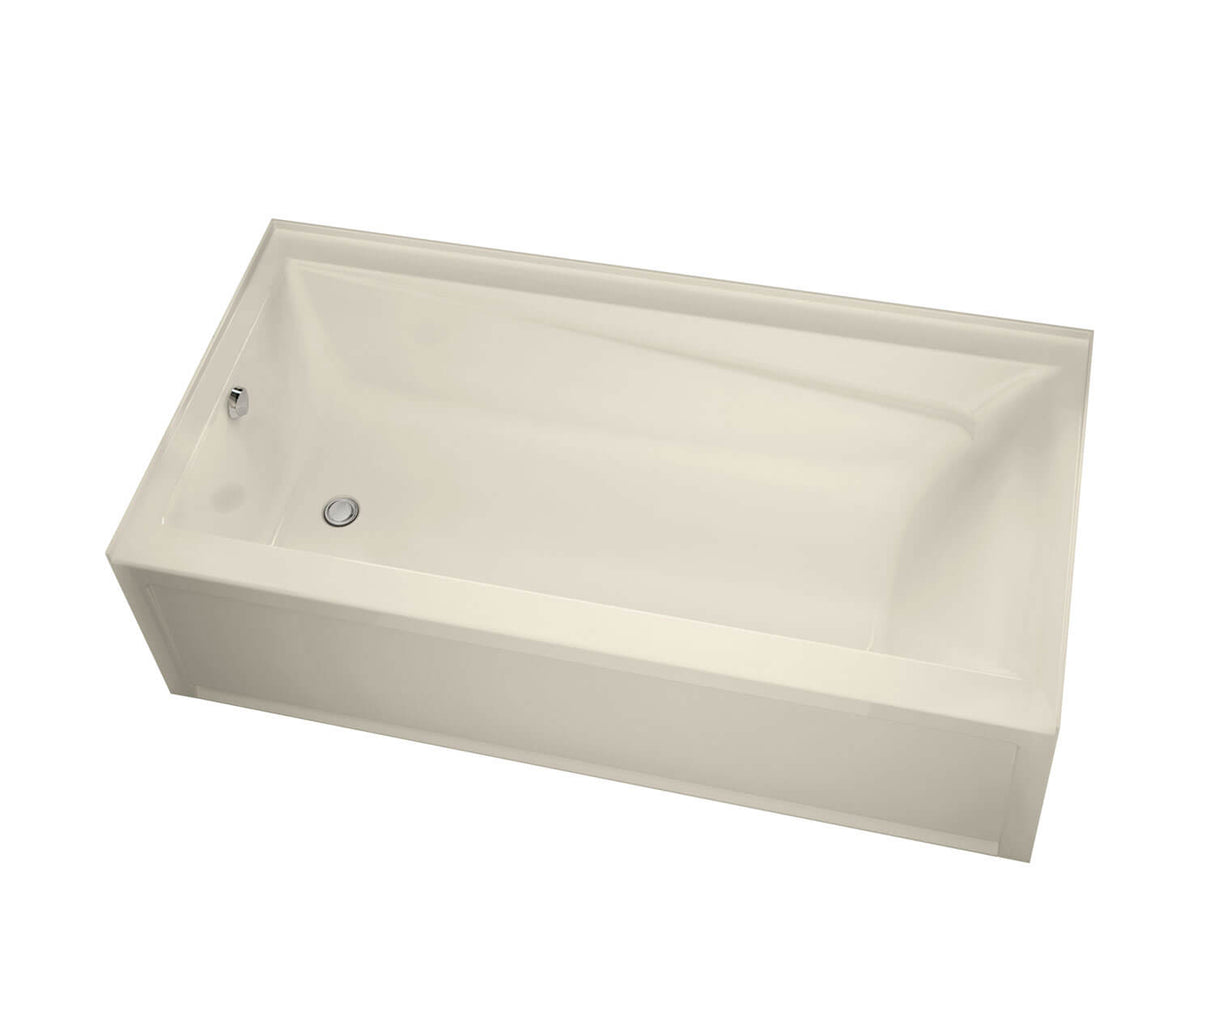 MAAX 105512-L-003-004 Exhibit 6032 IFS AFR Acrylic Alcove Left-Hand Drain Whirlpool Bathtub in Bone